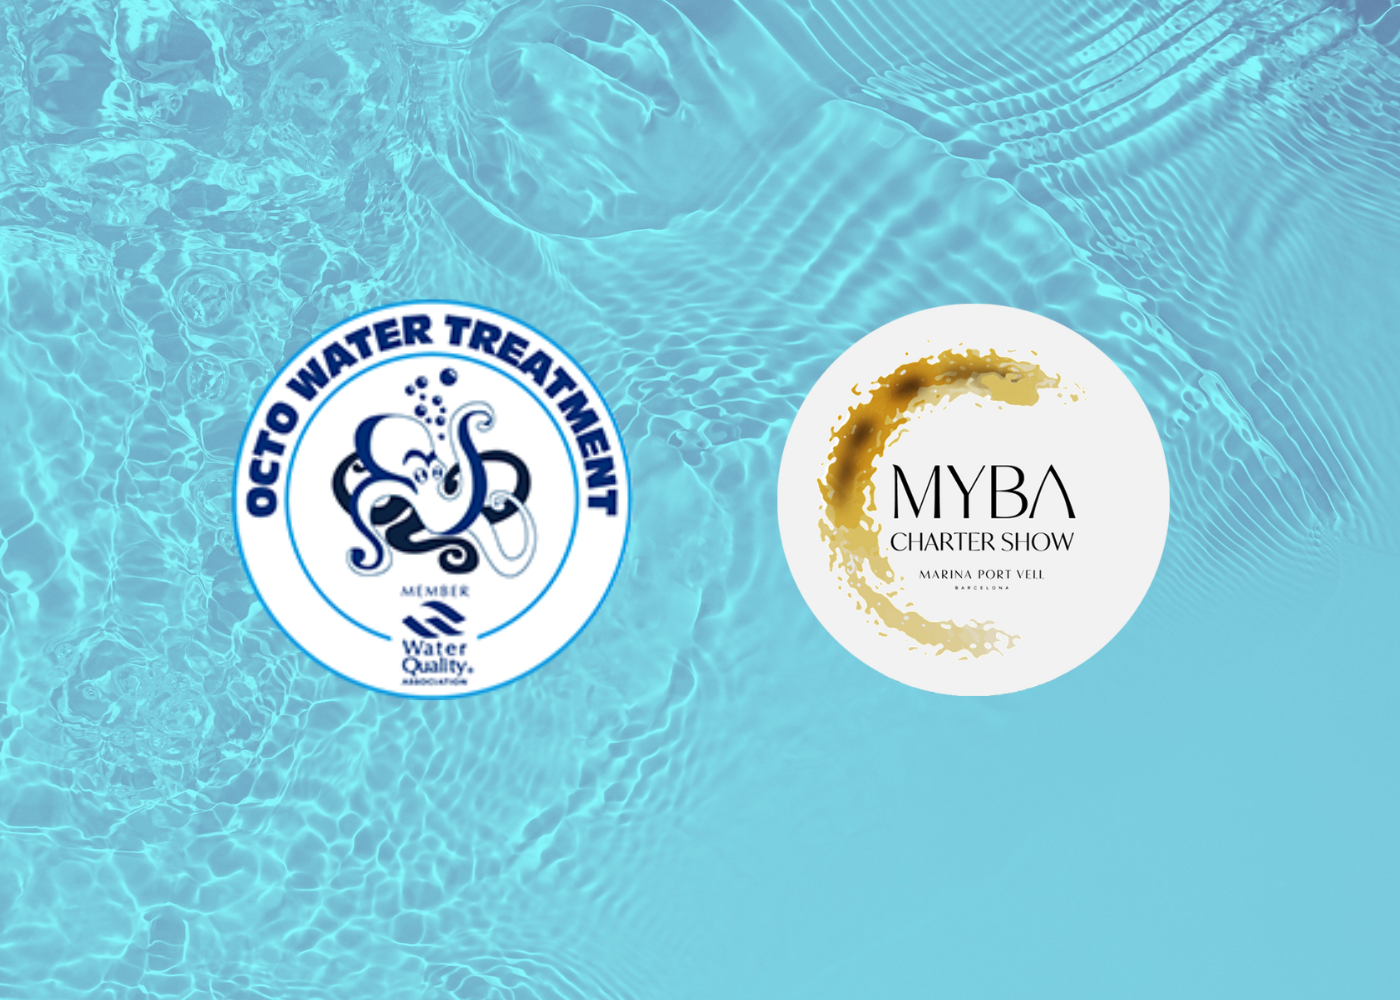 Octo Marine Logo and MYBA Charter Show Logo, on light blue water background